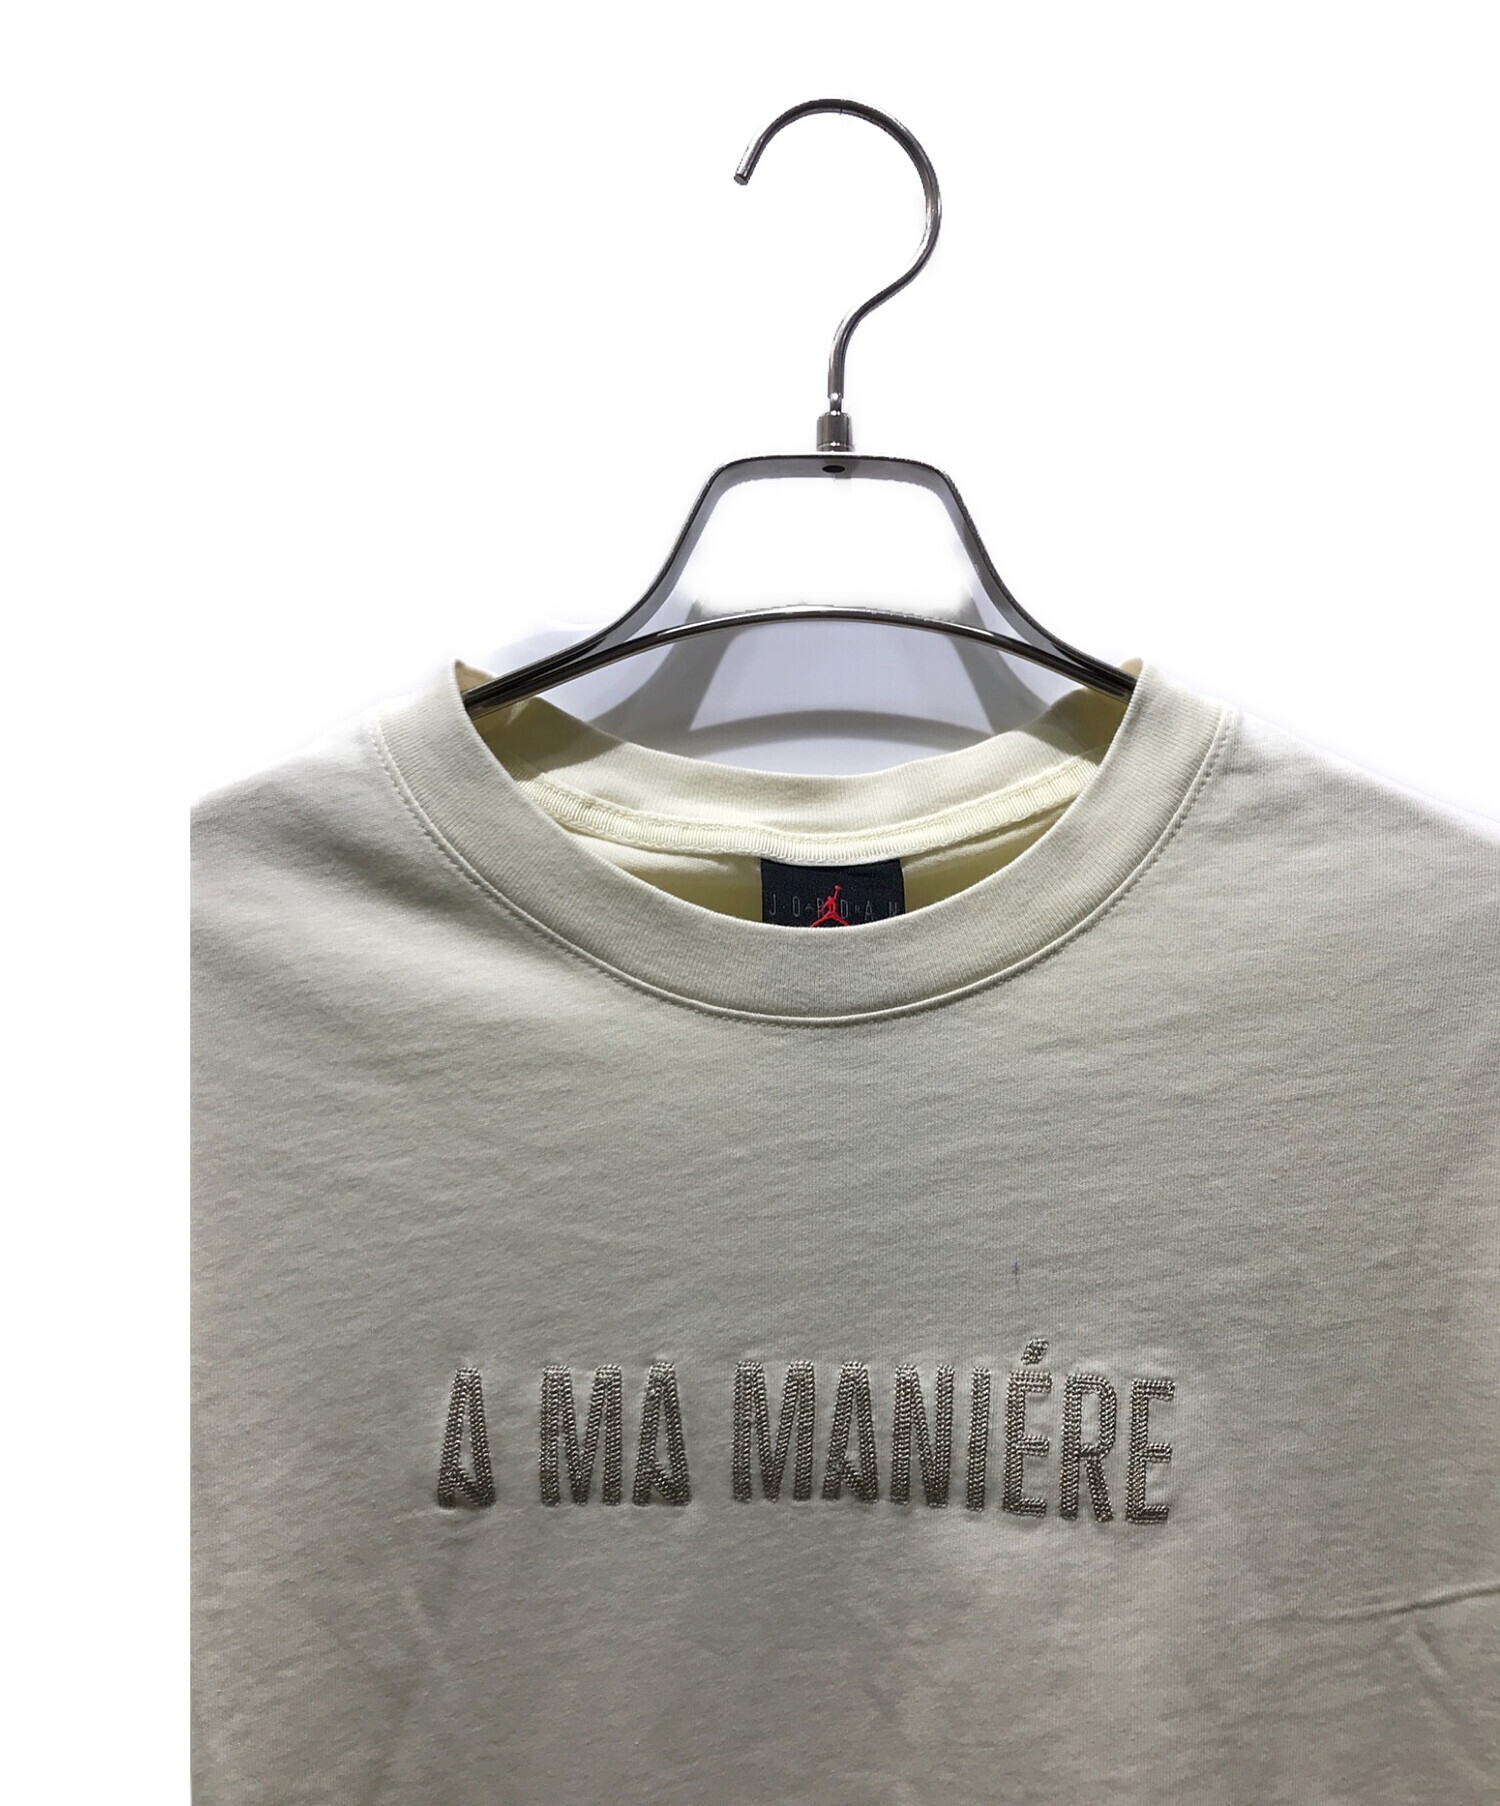 JORDAN (ジョーダン) A Ma Maniere (アママニエール) 刺繍Tシャツ ベージュ サイズ:Ⅼ 未使用品